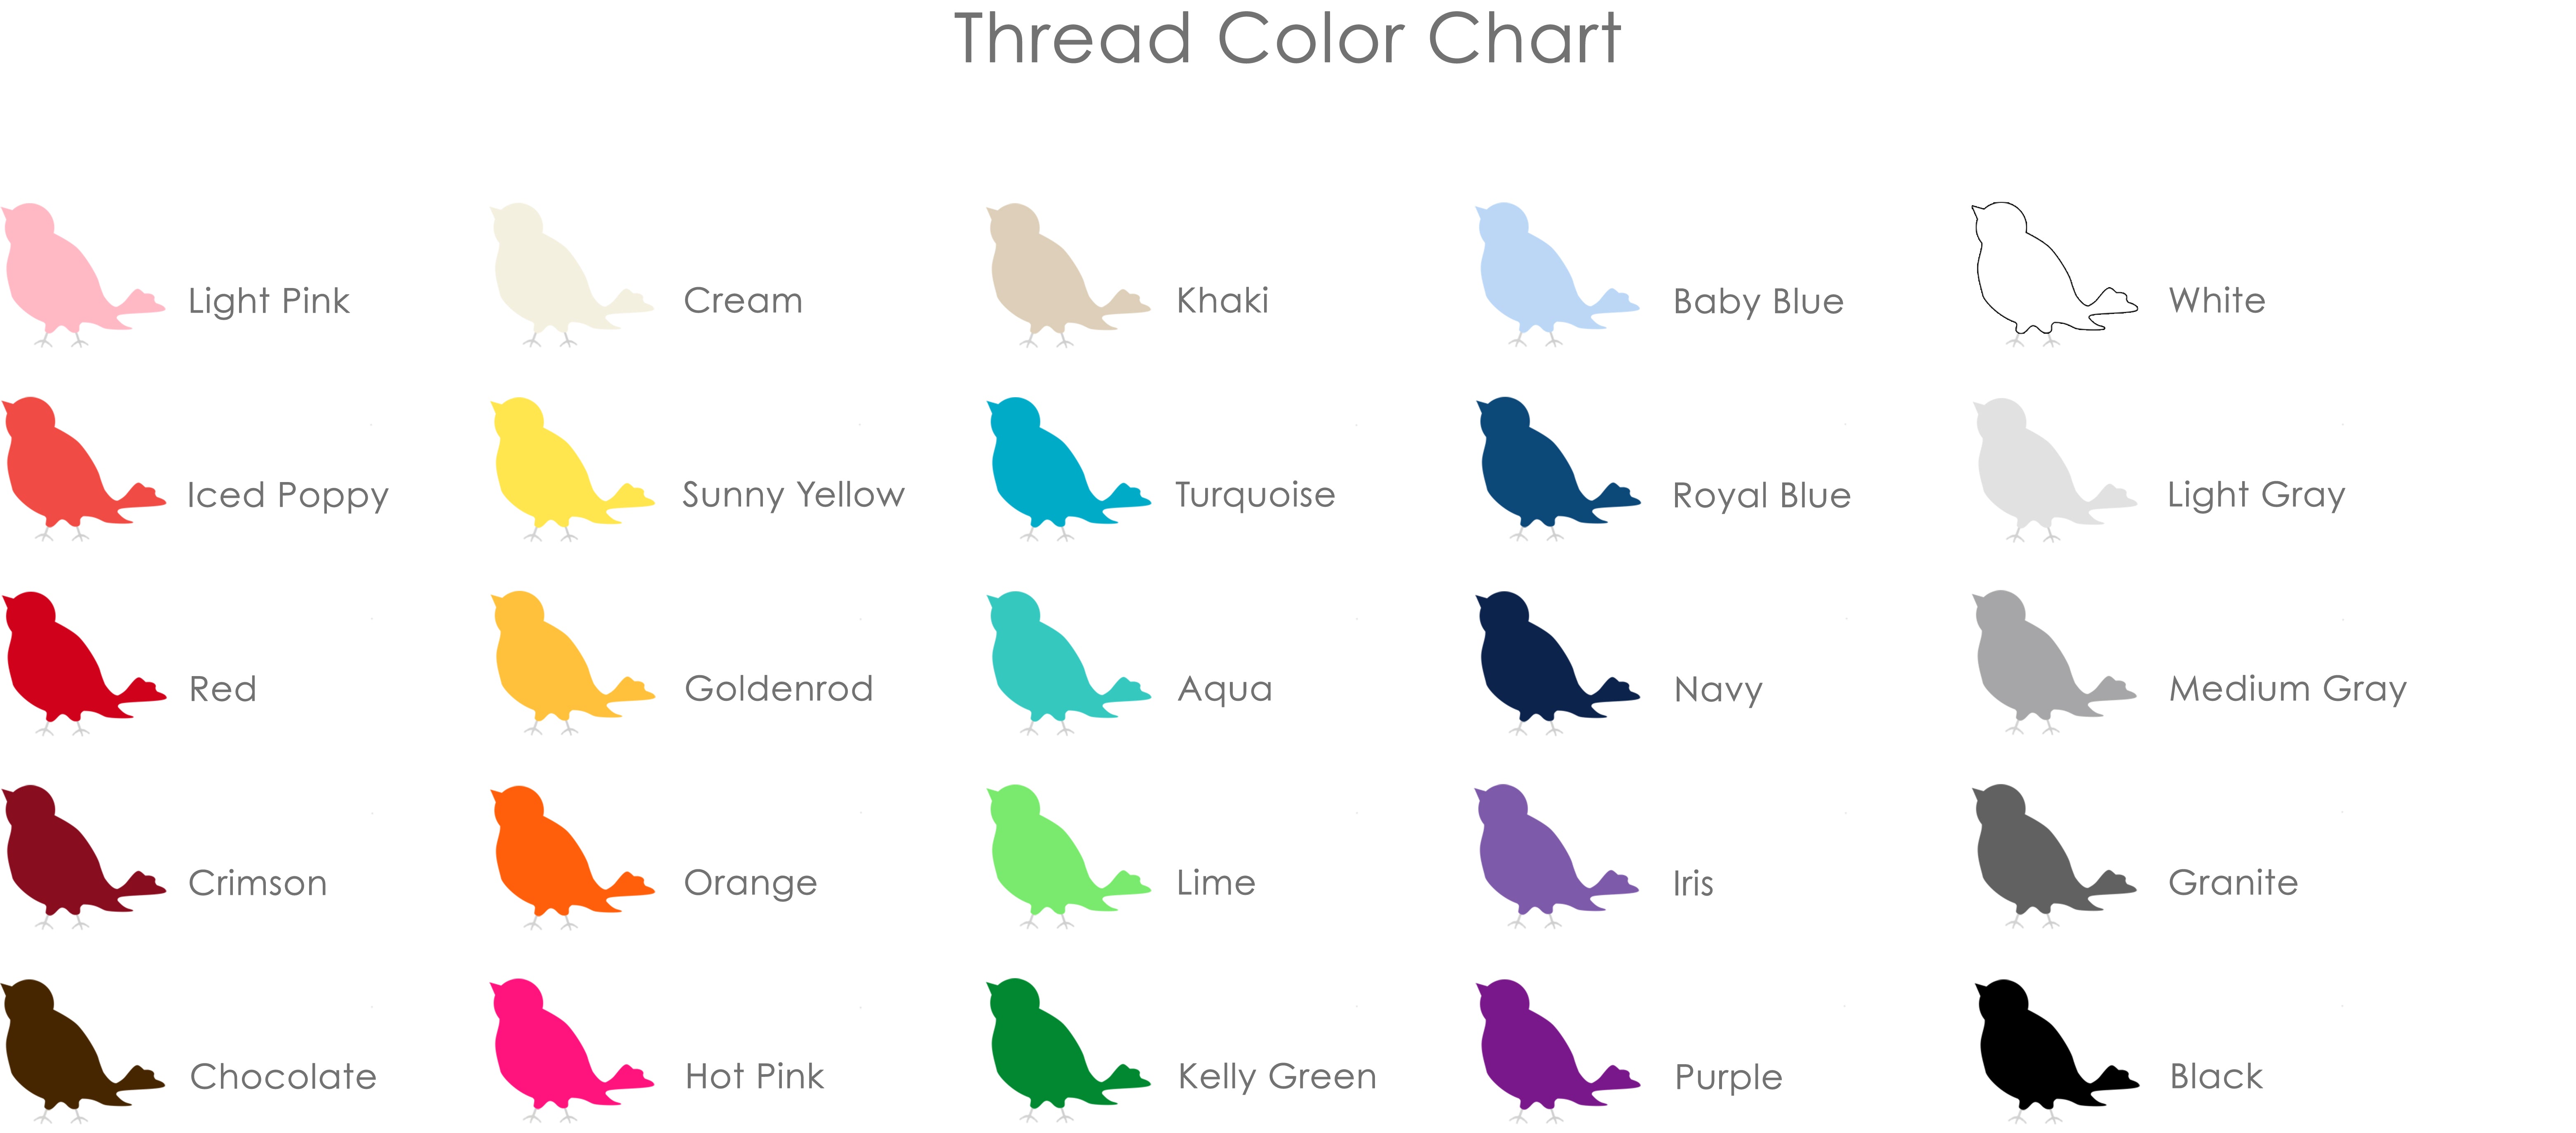 thread color chart